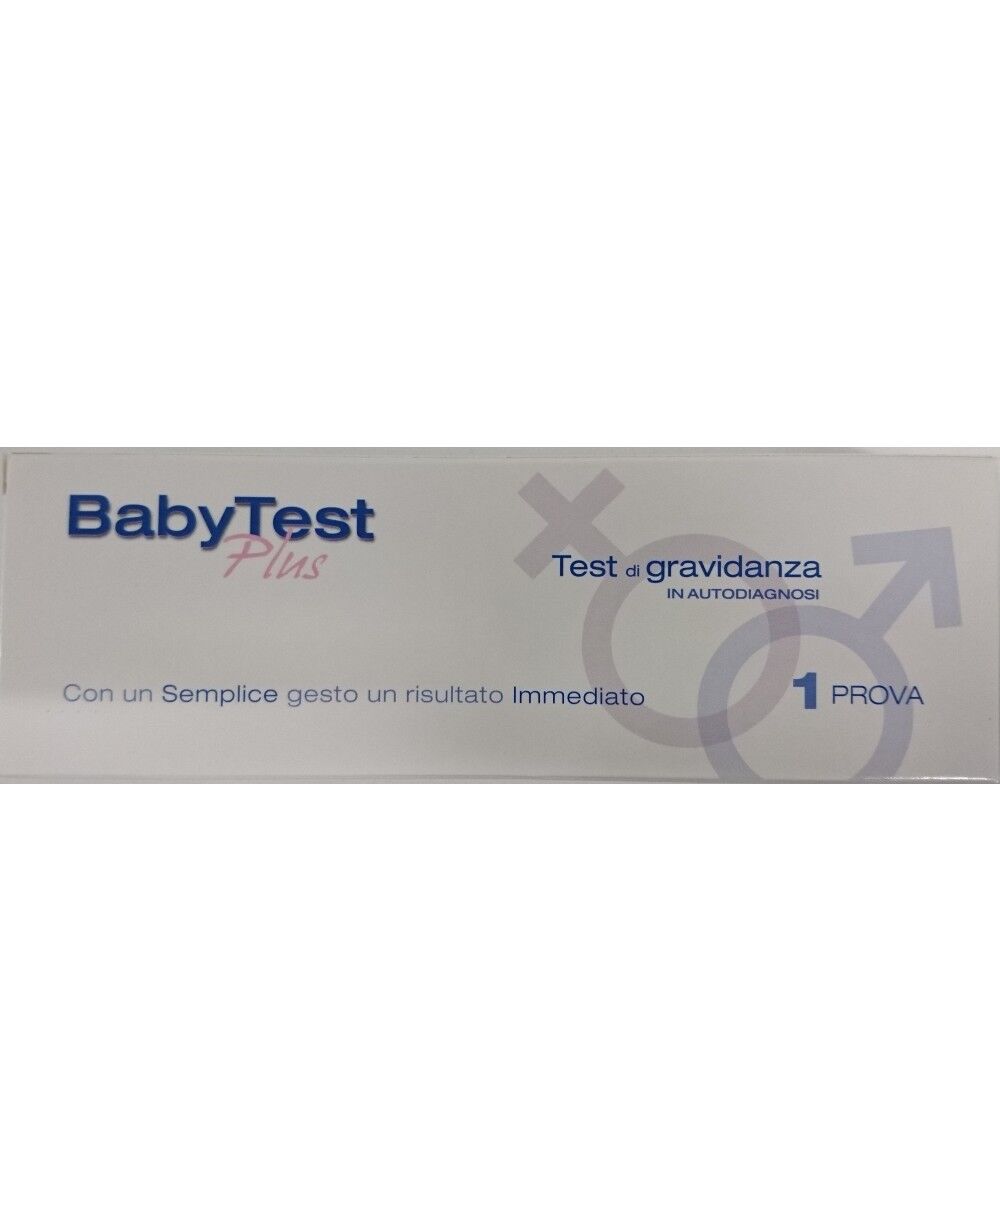 baxen italia sas test di gravidanza babytest plus